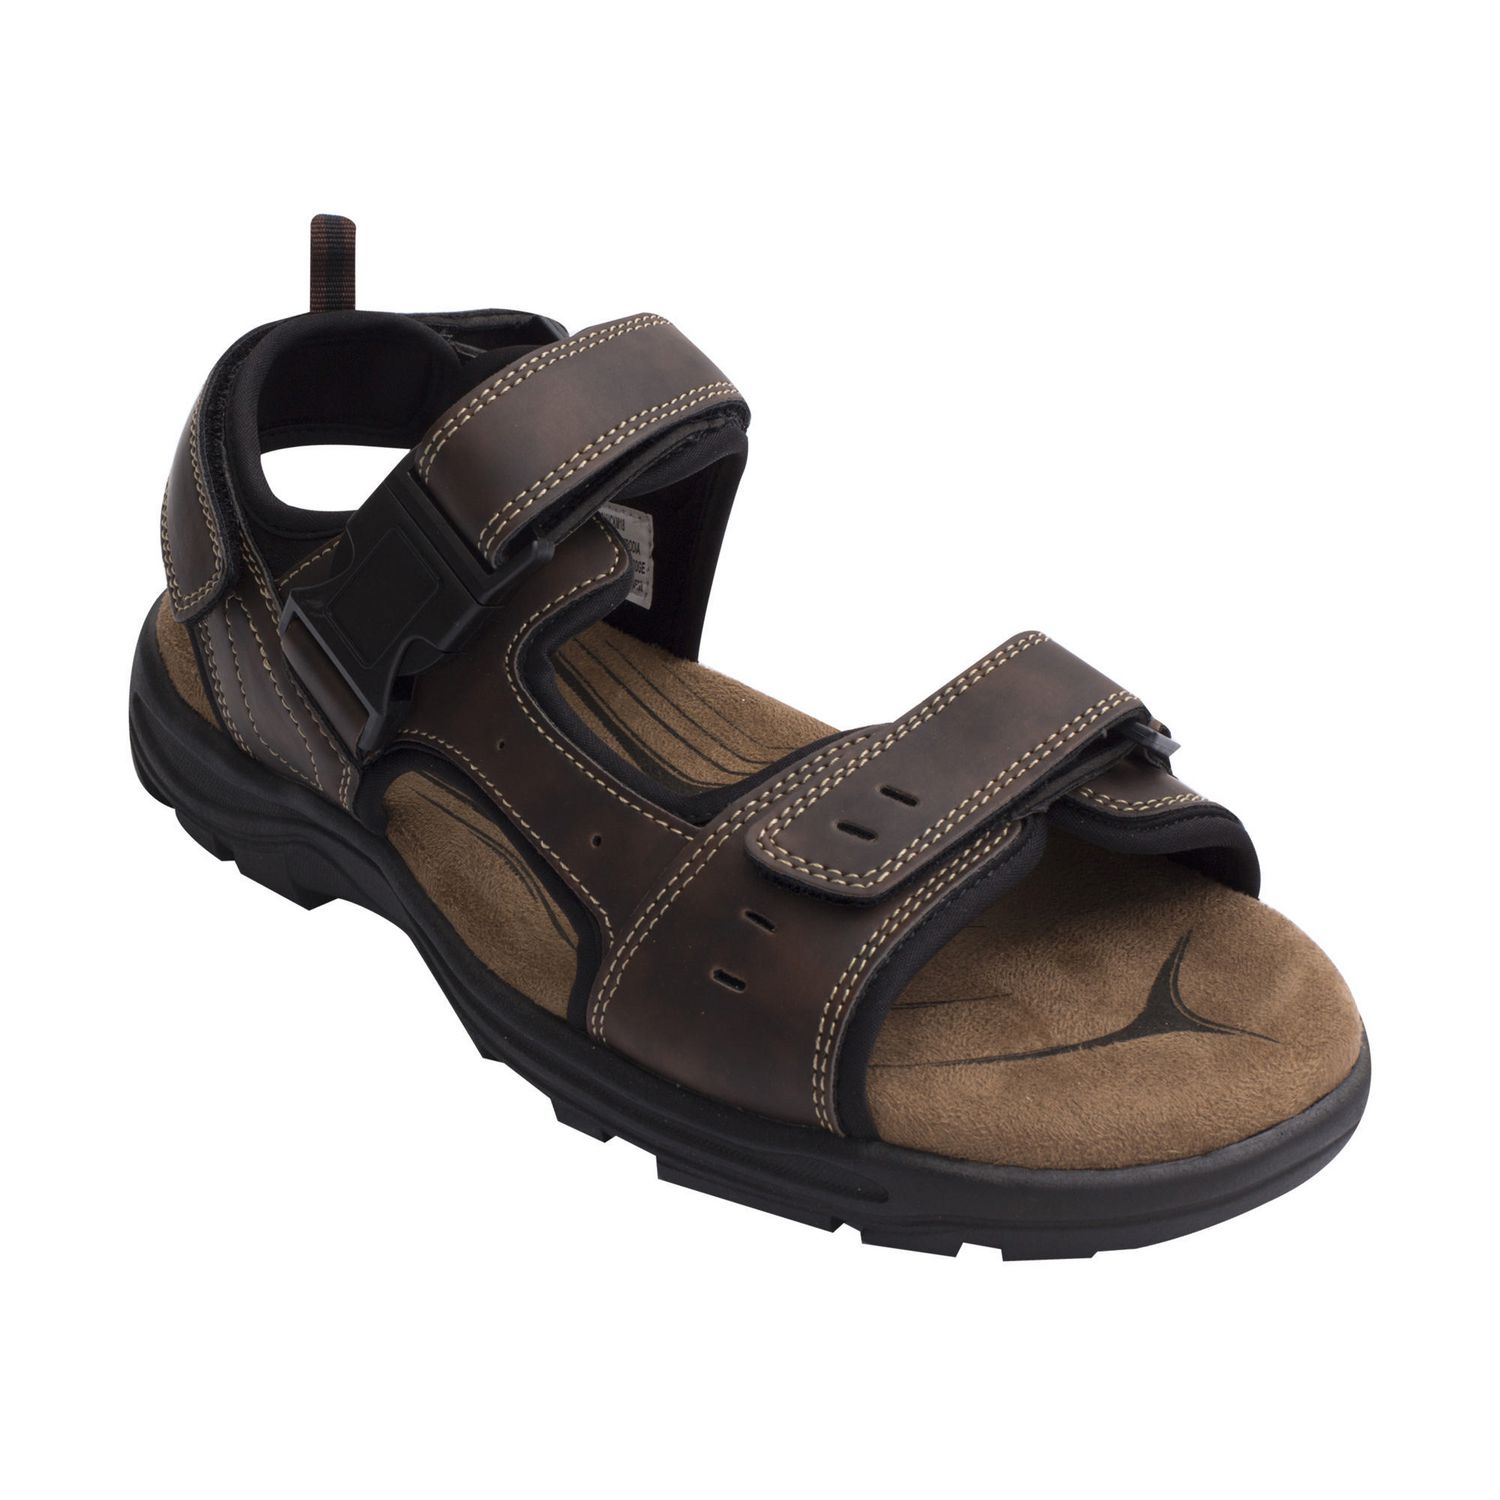 Ozark Trail Men’s Self-Adhesive Strap Sport Sandals | Walmart Canada